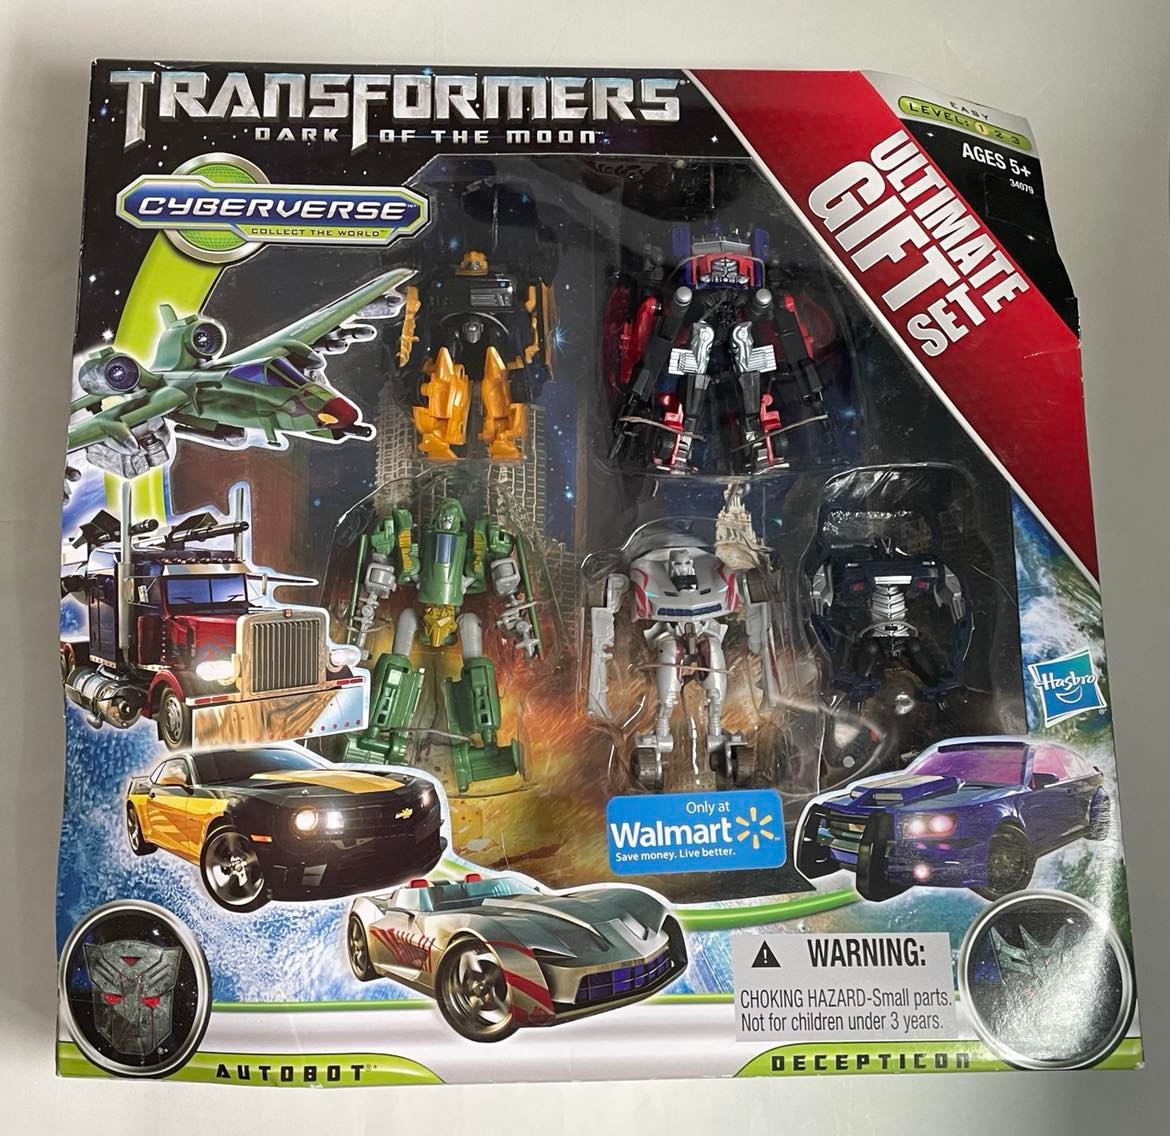 Transformers Dark Of The Moon CyberVerse Autobot Figures